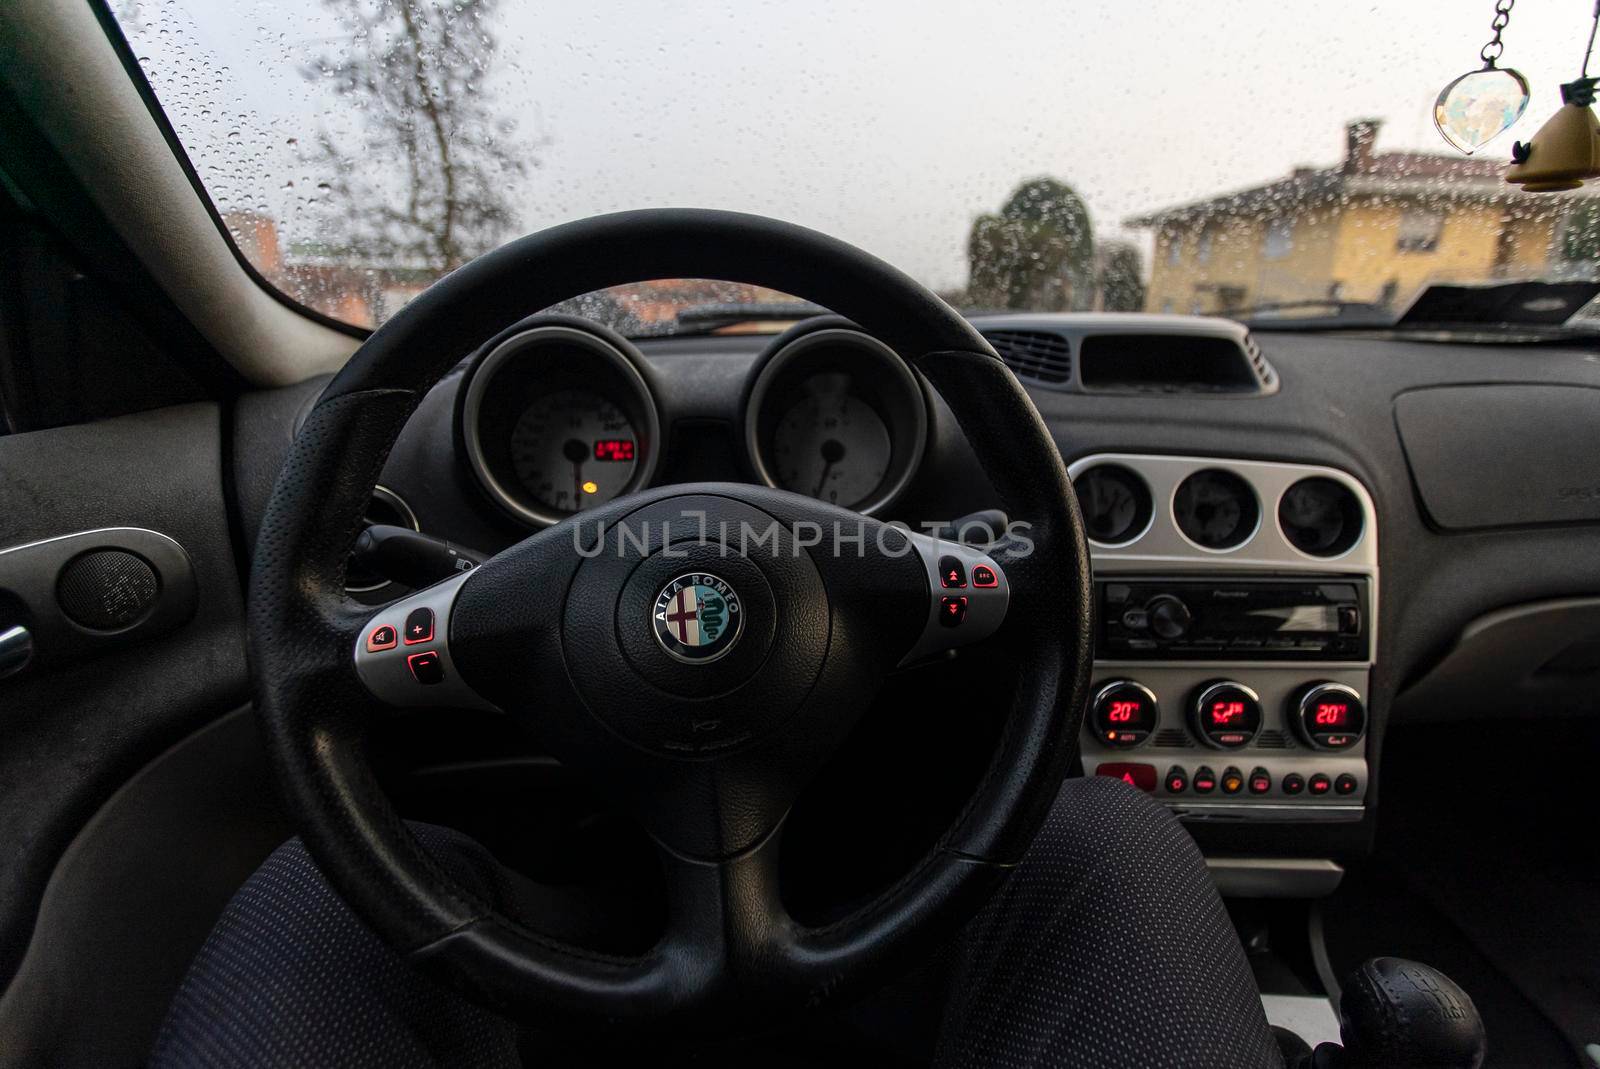 Car dashboard interior detail by pippocarlot